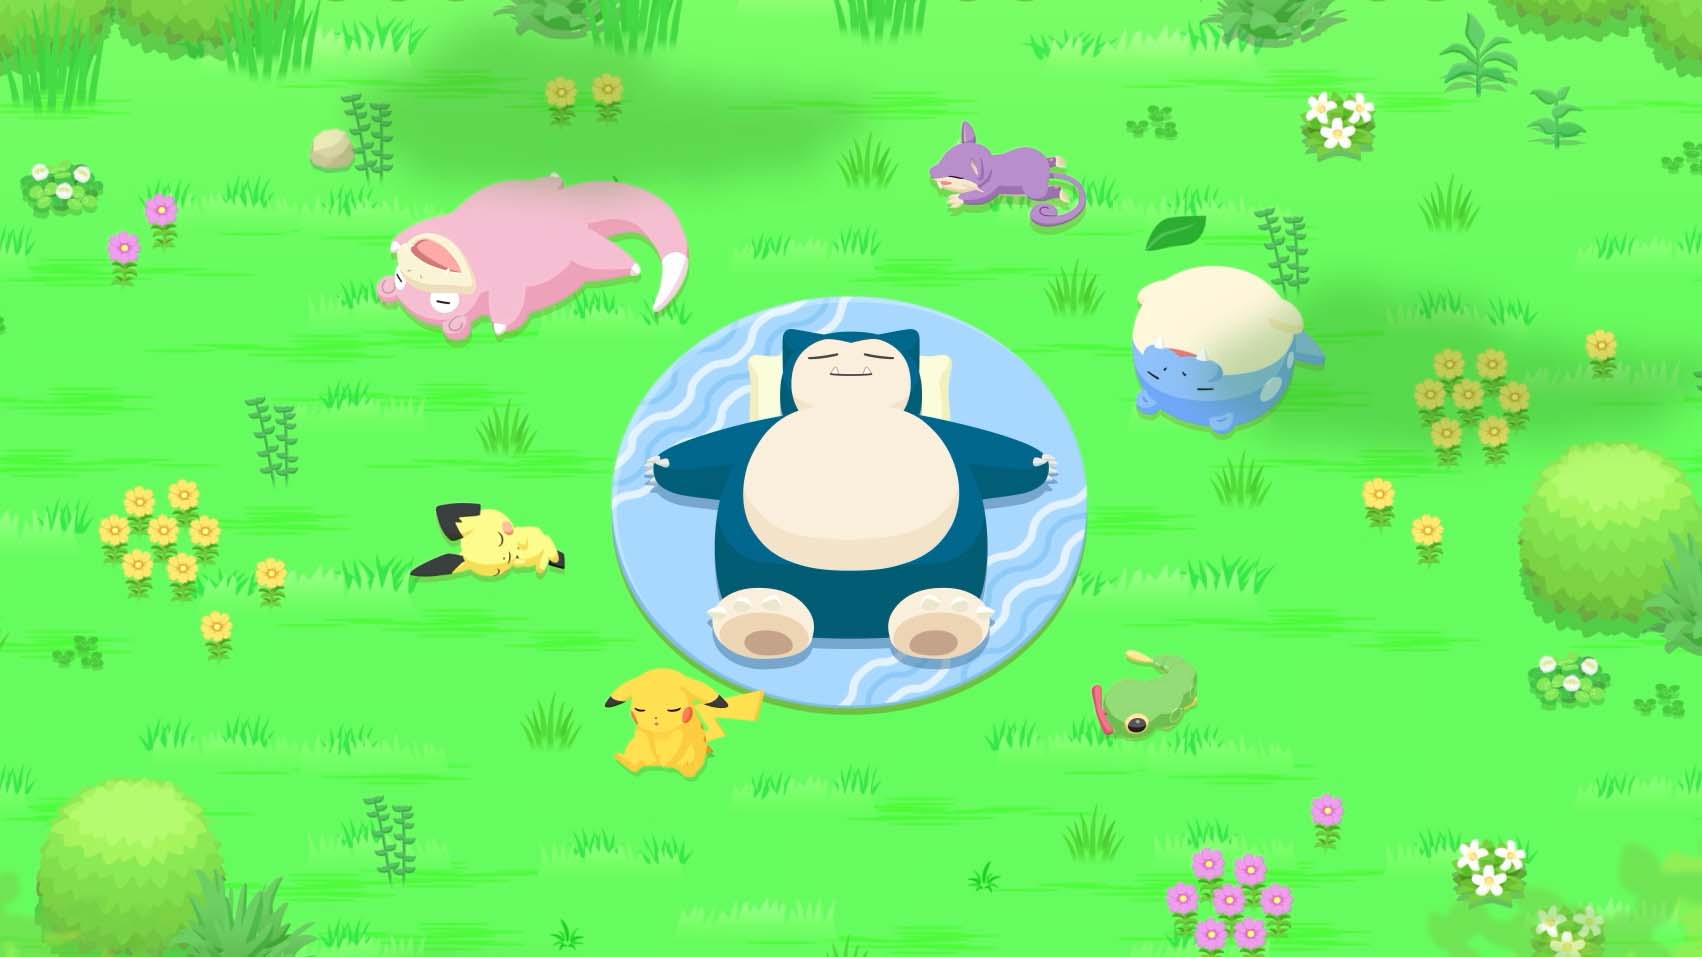 Pokémon Sleep: Snorlax surrounded by various sleeping Pokémon.